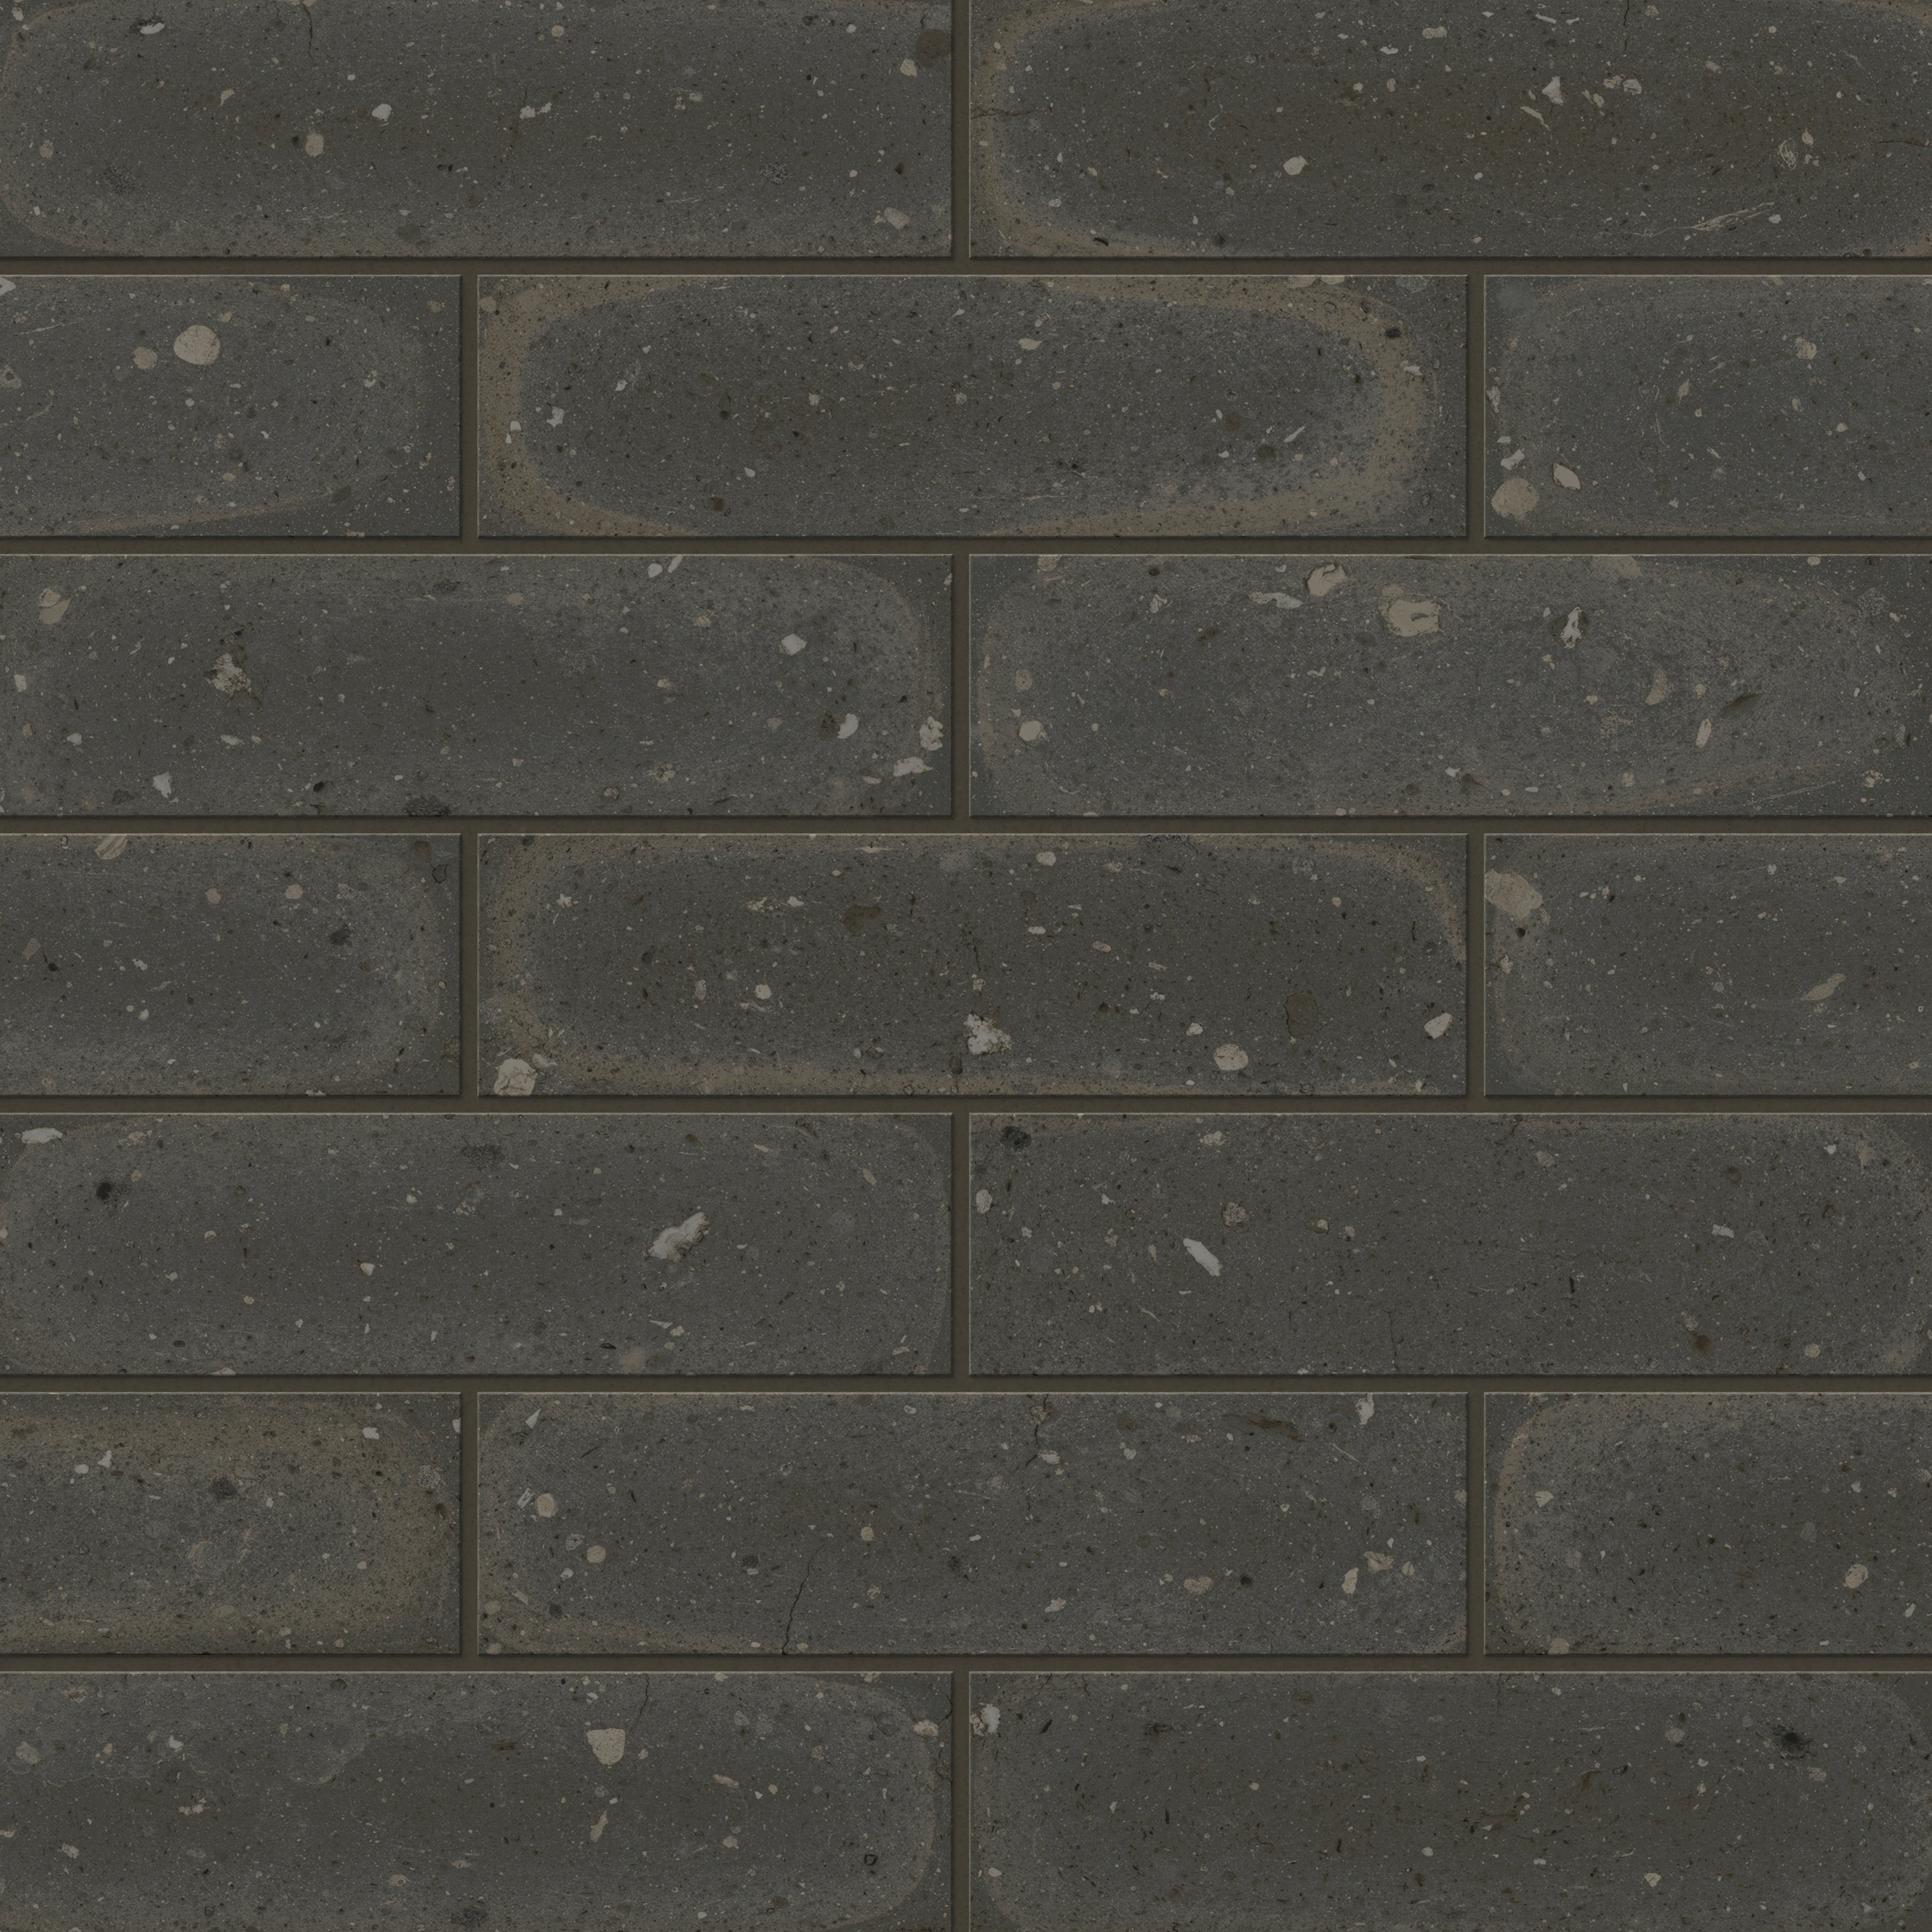 Marsden 3x10 Matte Ceramic Tile in Coal